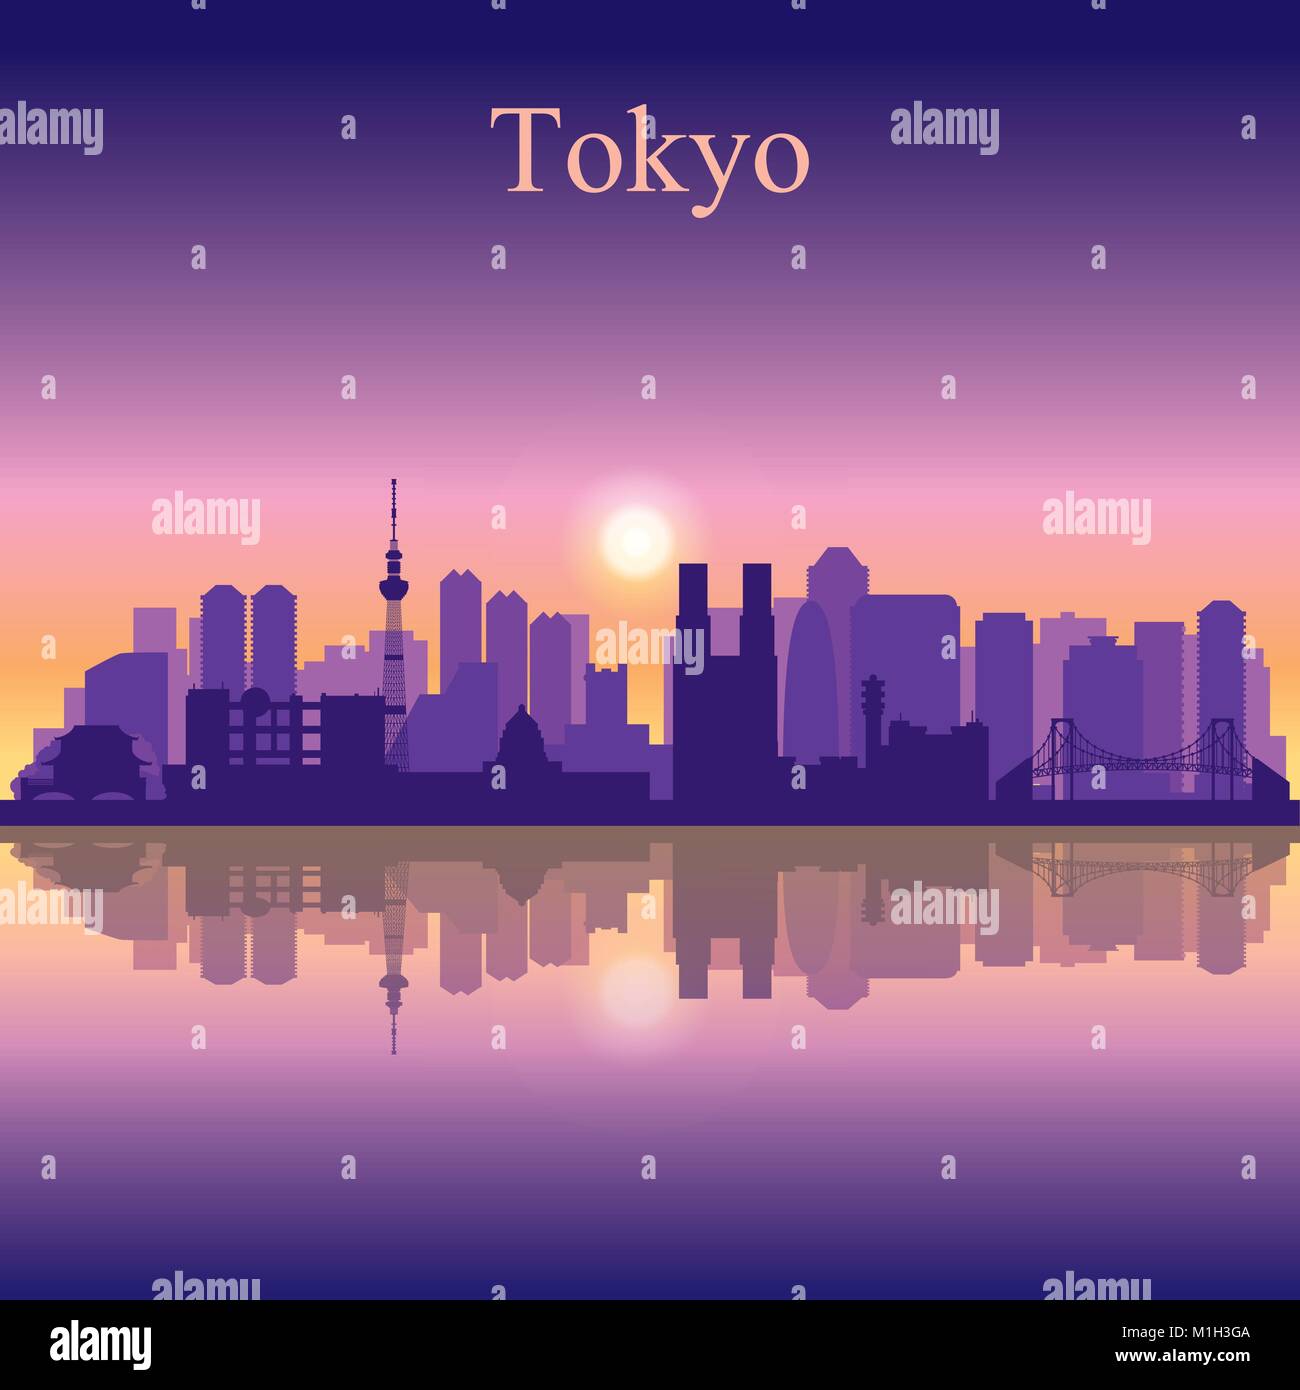 Tokyo city skyline silhouette background. Vector illustration Stock Vector